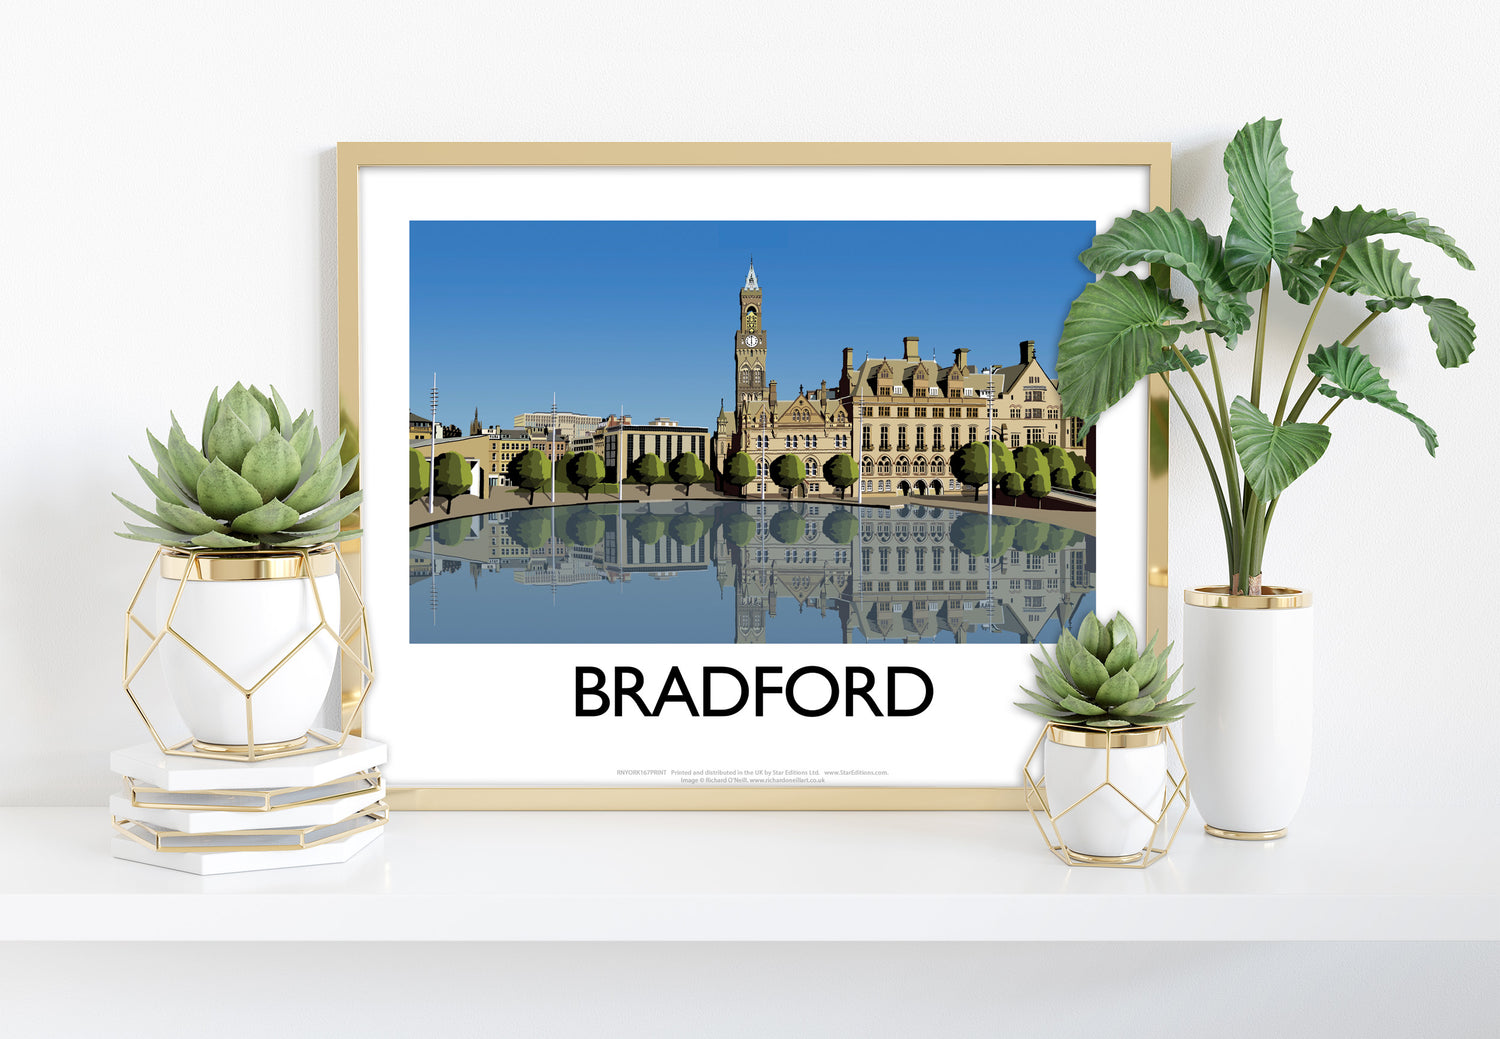 Bradford, West Yorkshire - Art Print